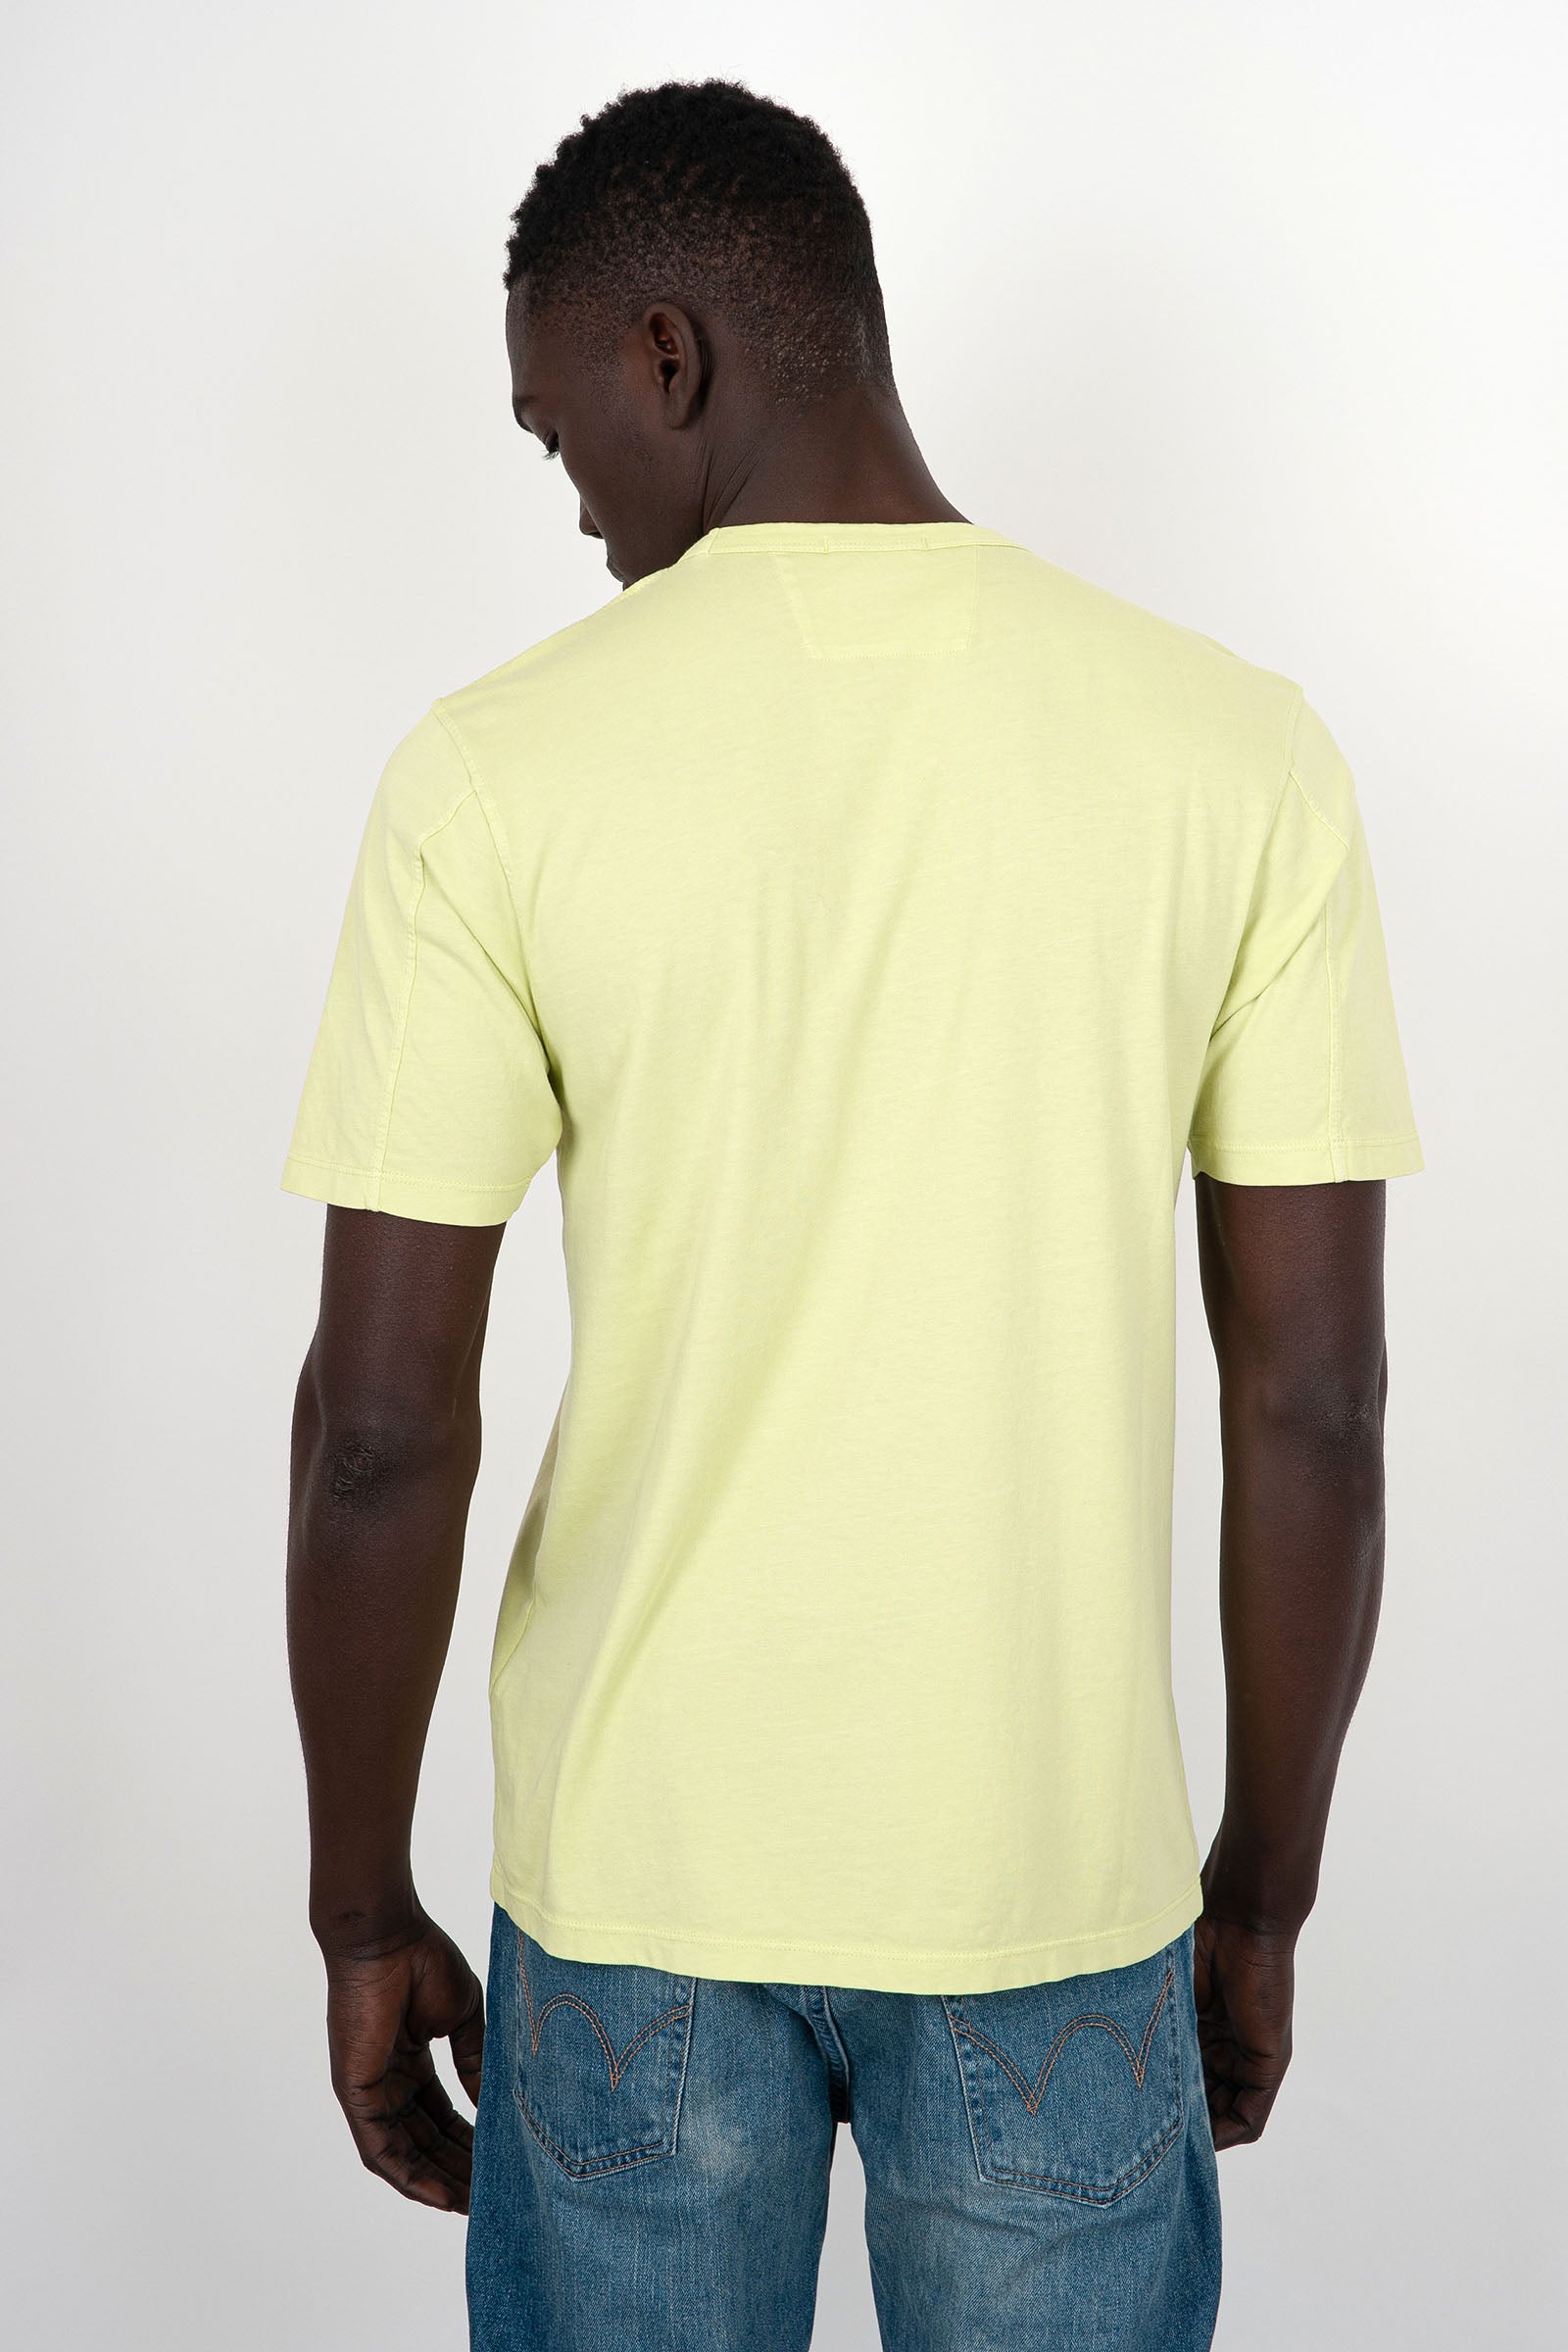 C.P. Company T-Shirt 24/1 Jersey Resist Dye Pocket Light Green - 4